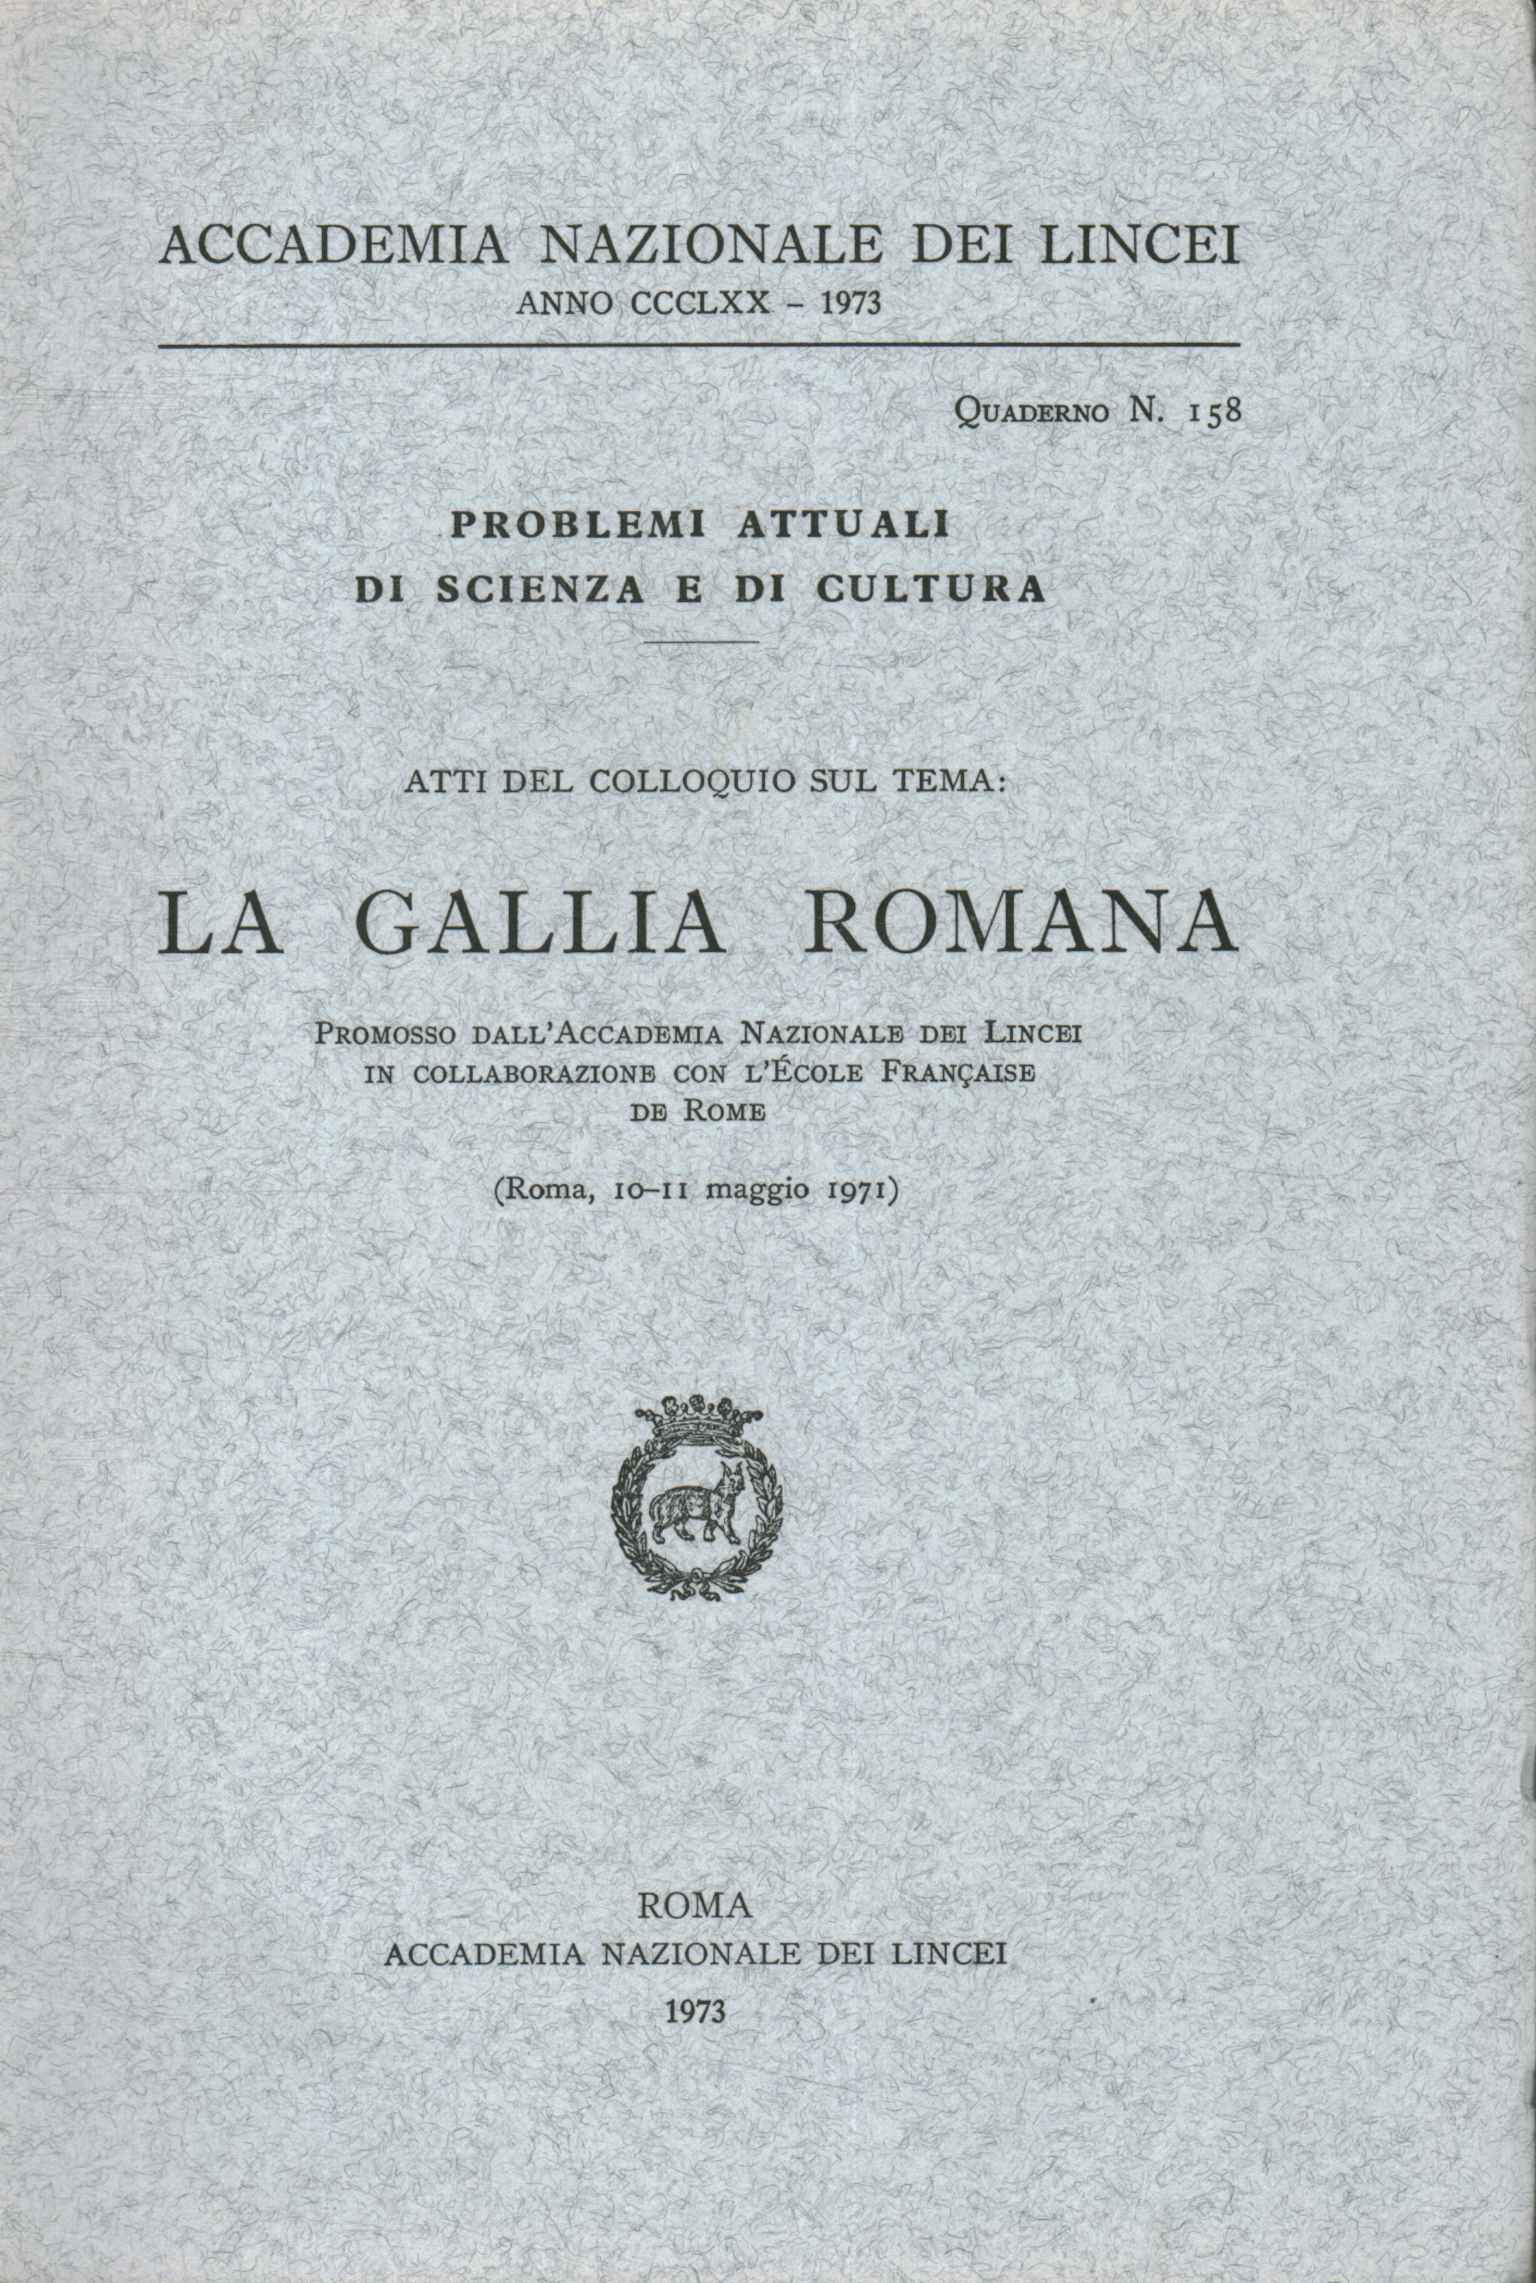 La Gallia romana